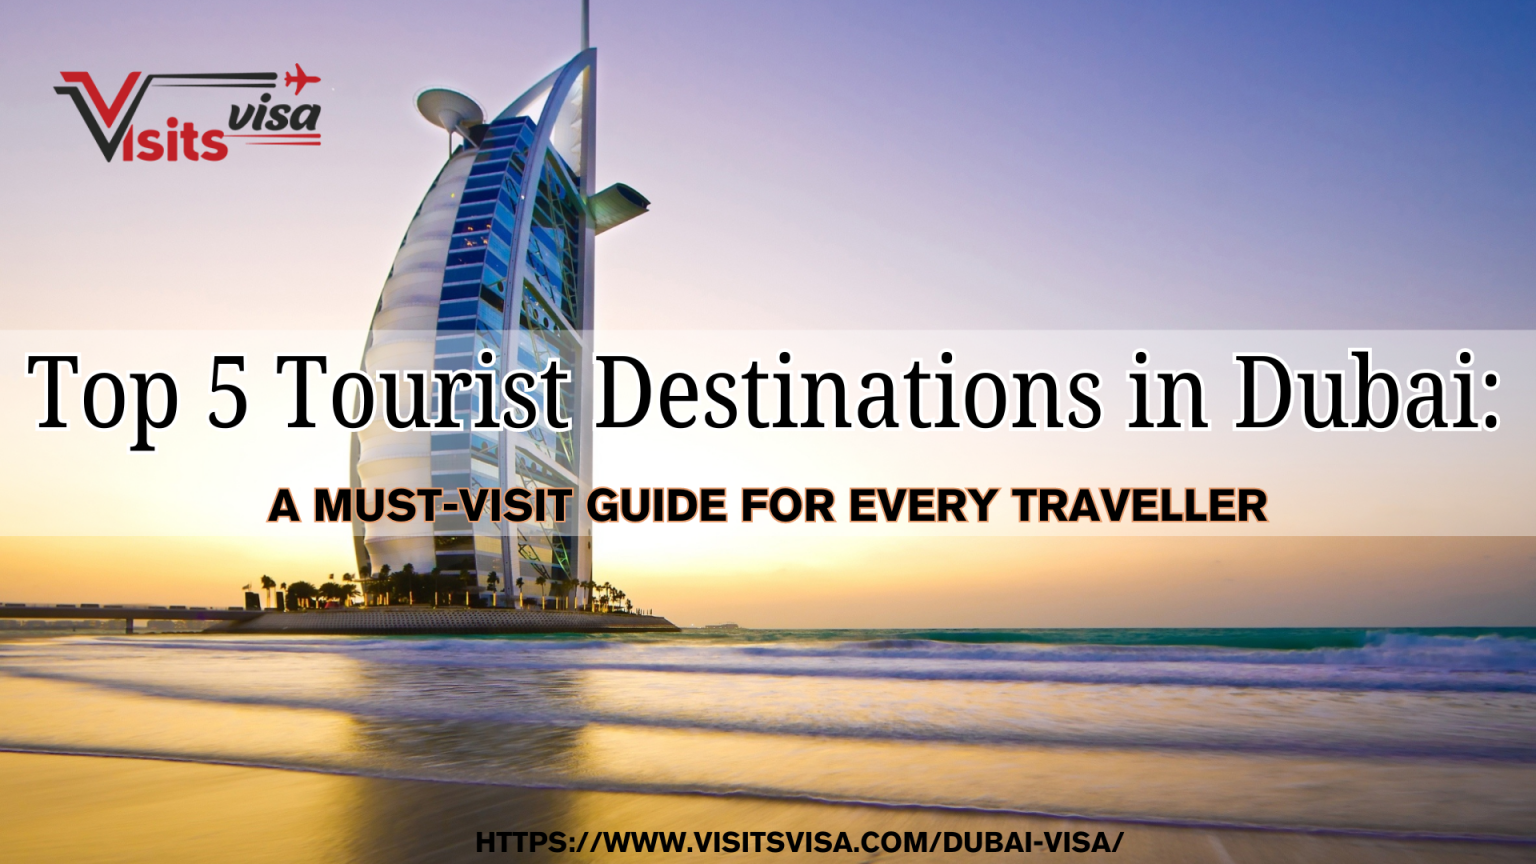 Top 5 Tourist Destinations in Dubai: